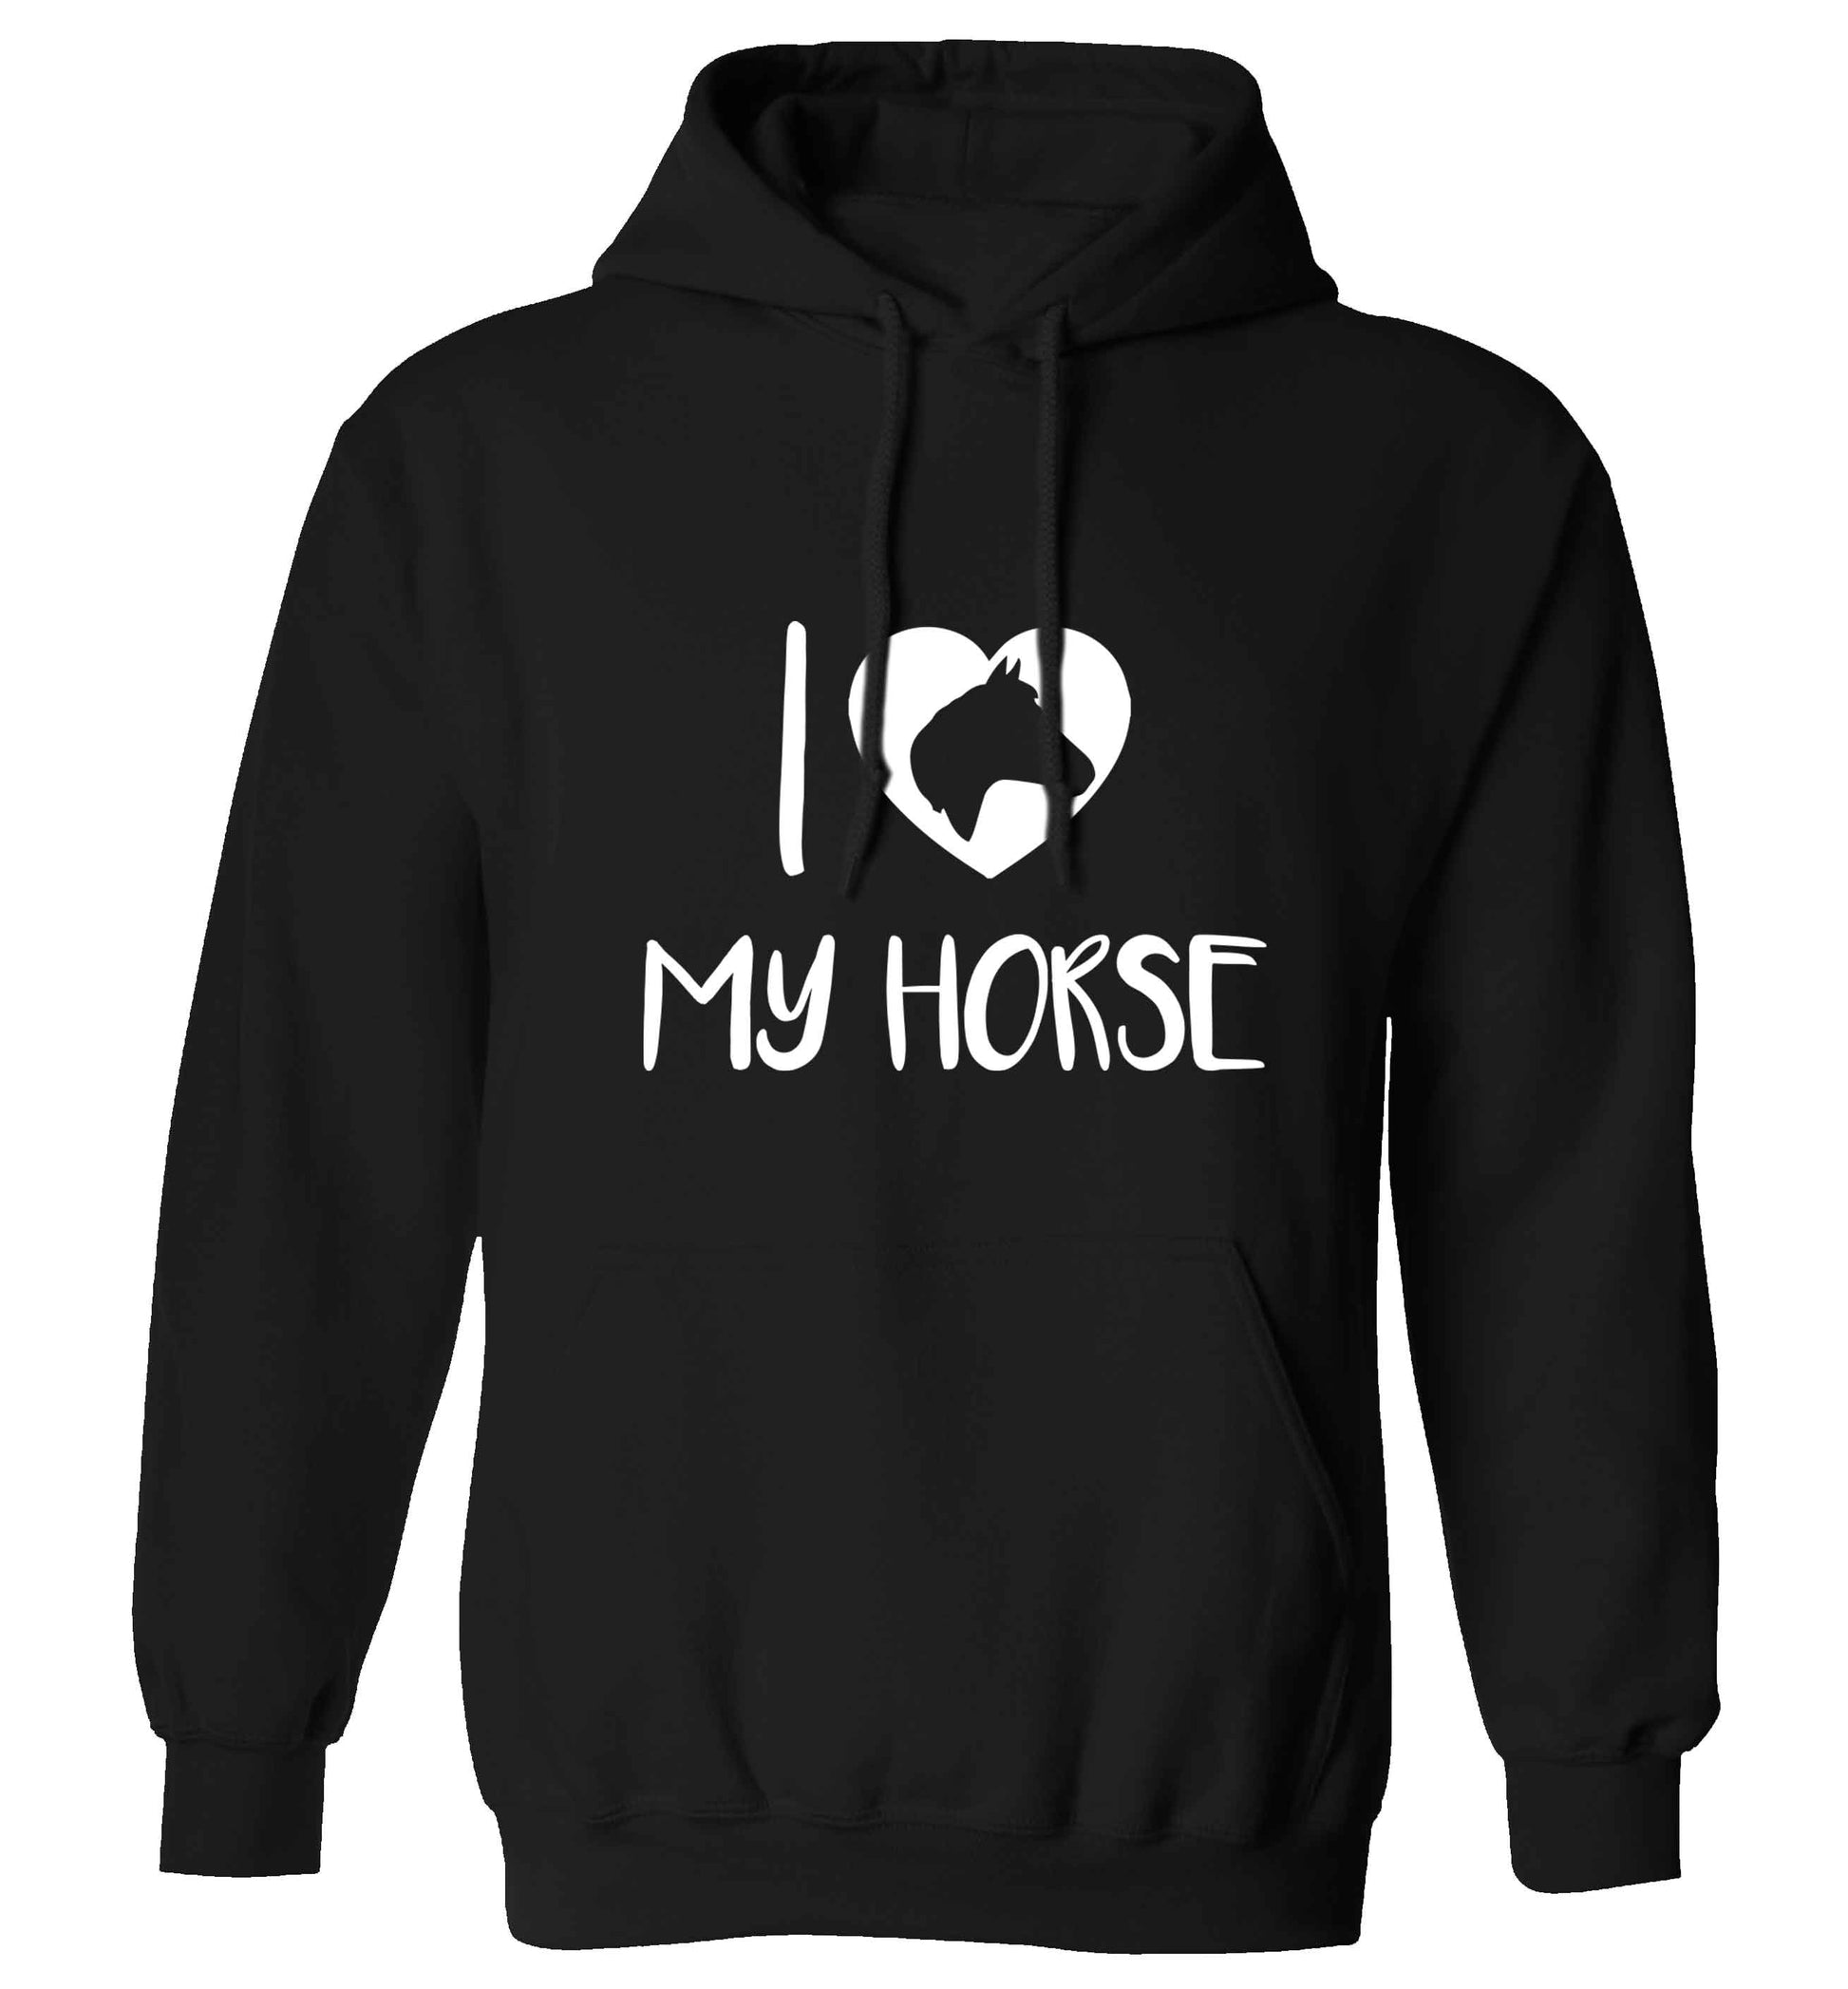 I love my horse adults unisex black hoodie 2XL